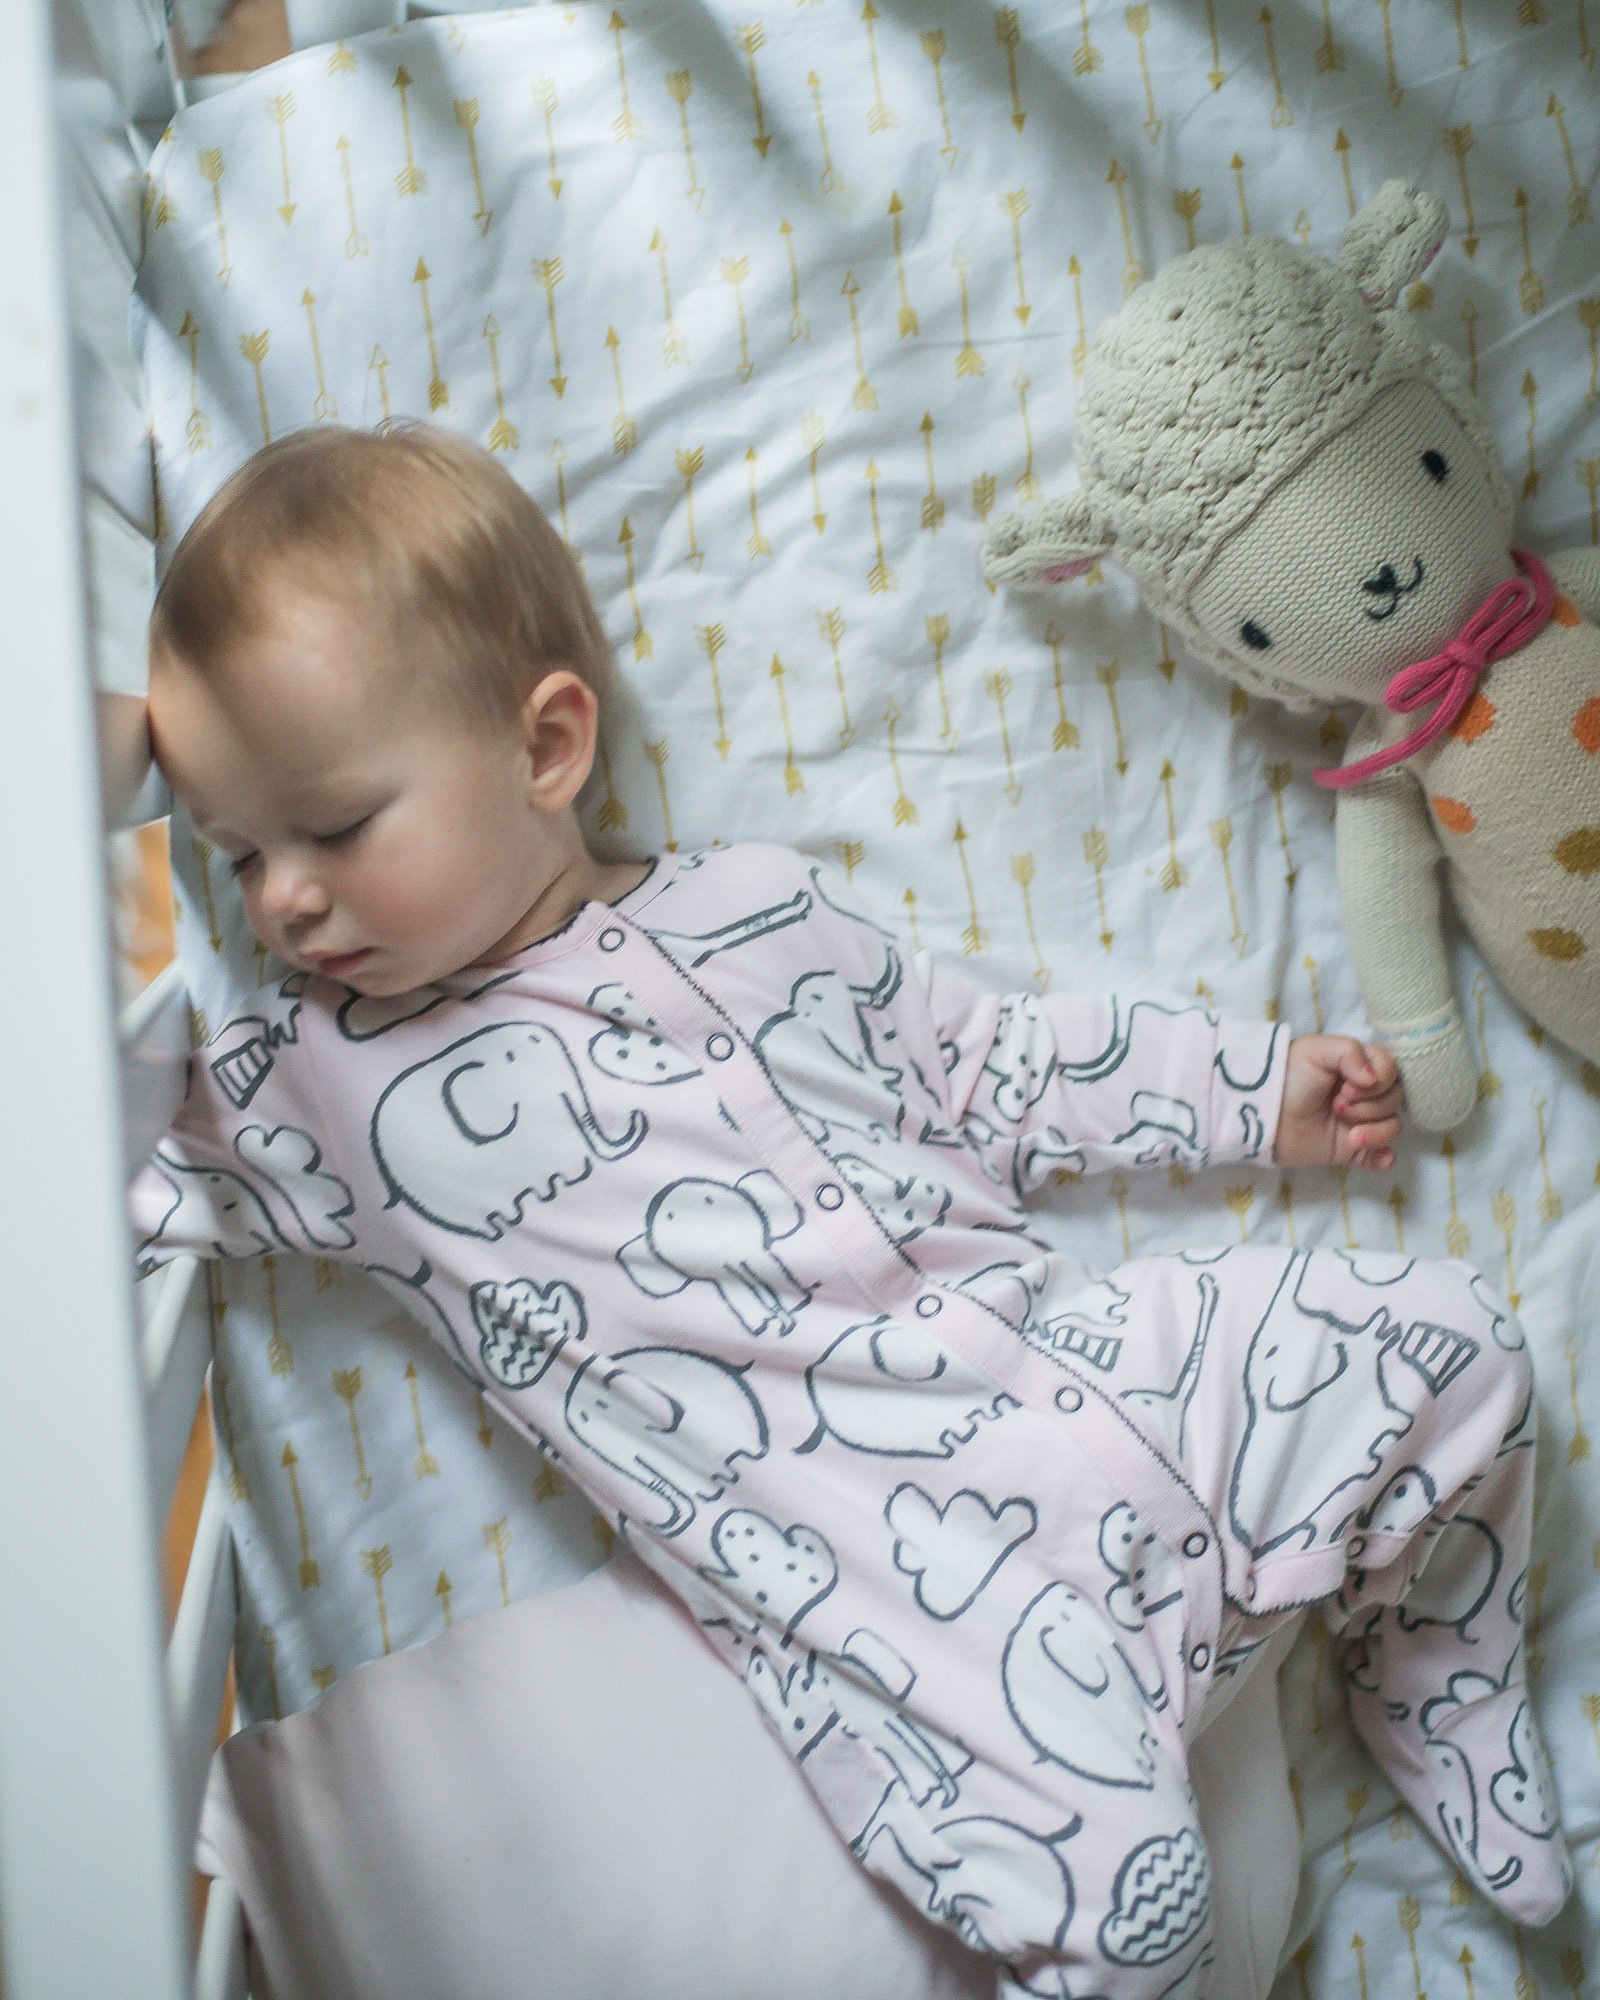 Sleep expert Lindsay Lewis shares tips for sleep training a baby.